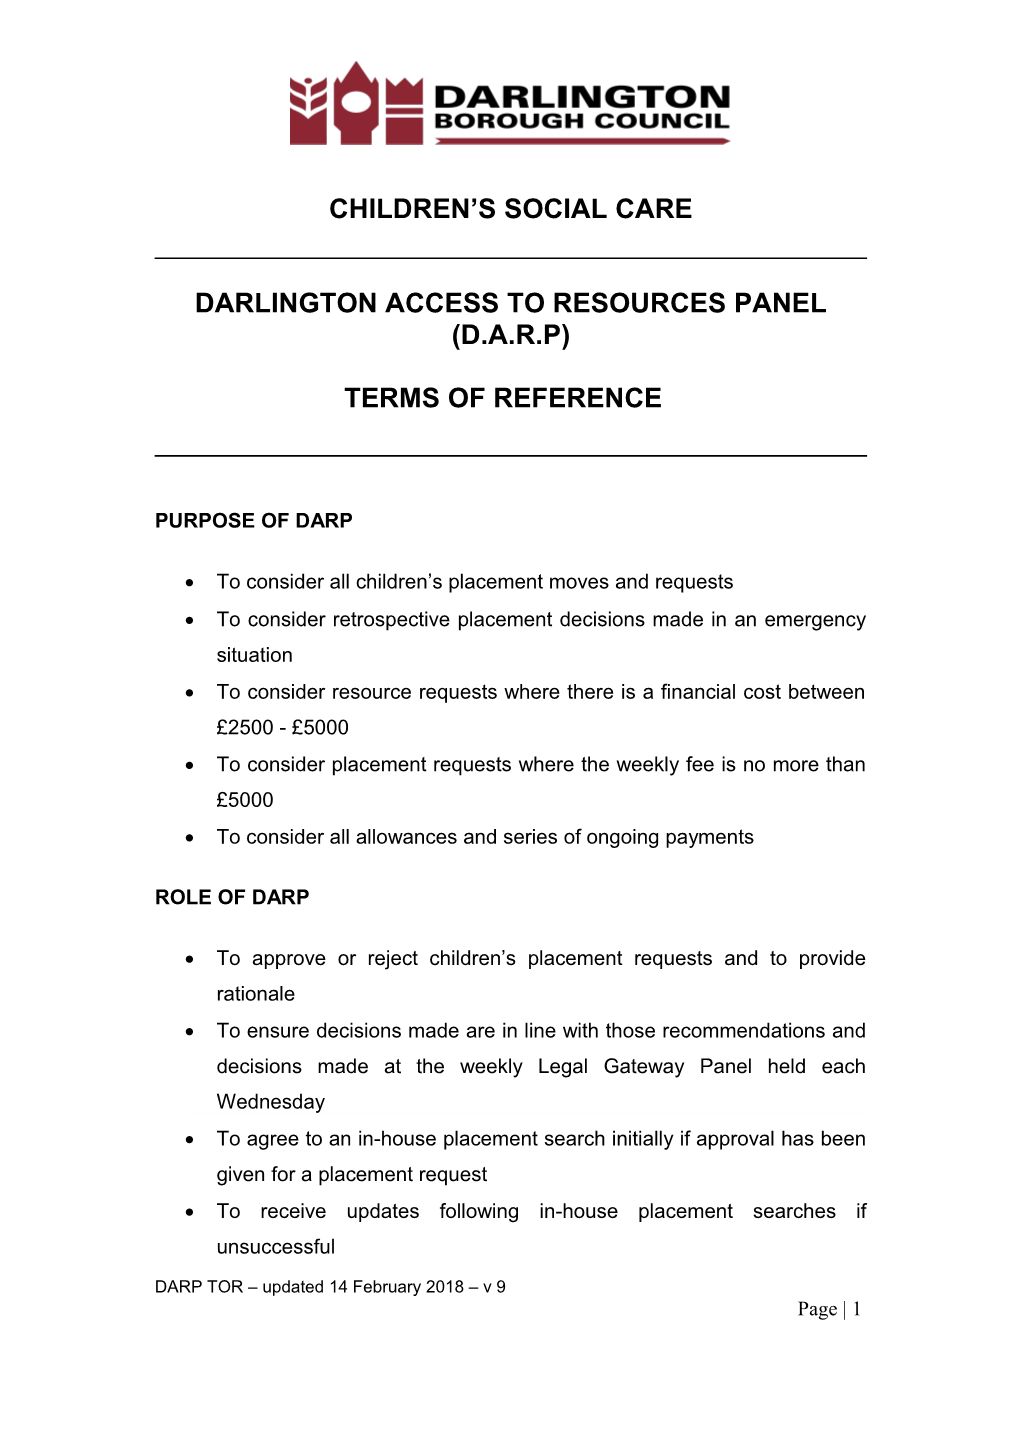 Darlington Access to Resources Panel (D.A.R.P)